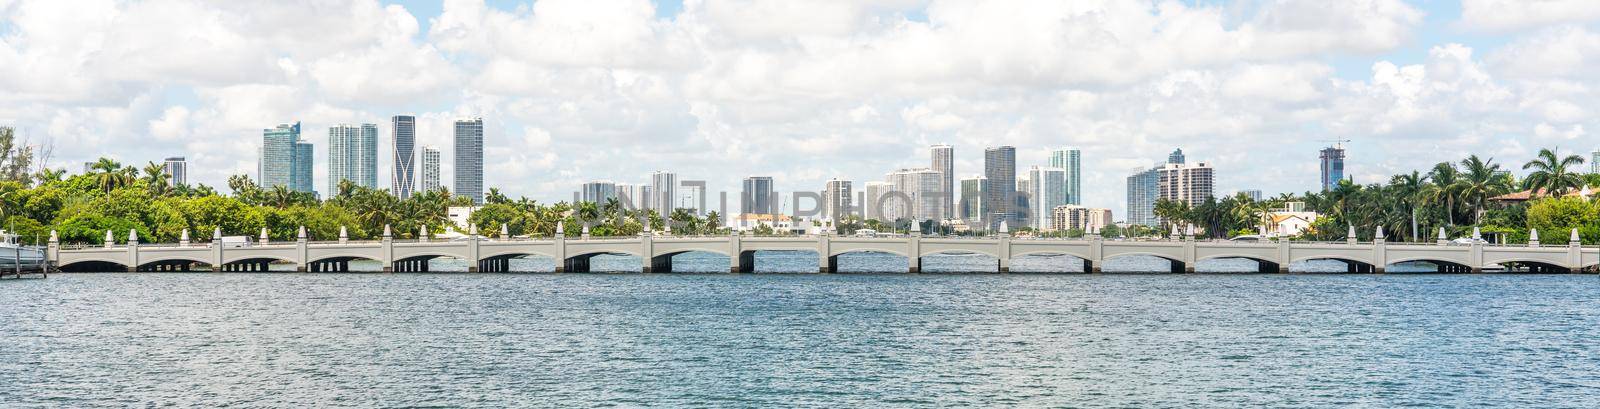 Miami skyline with skyscrapers and bridge over the sea